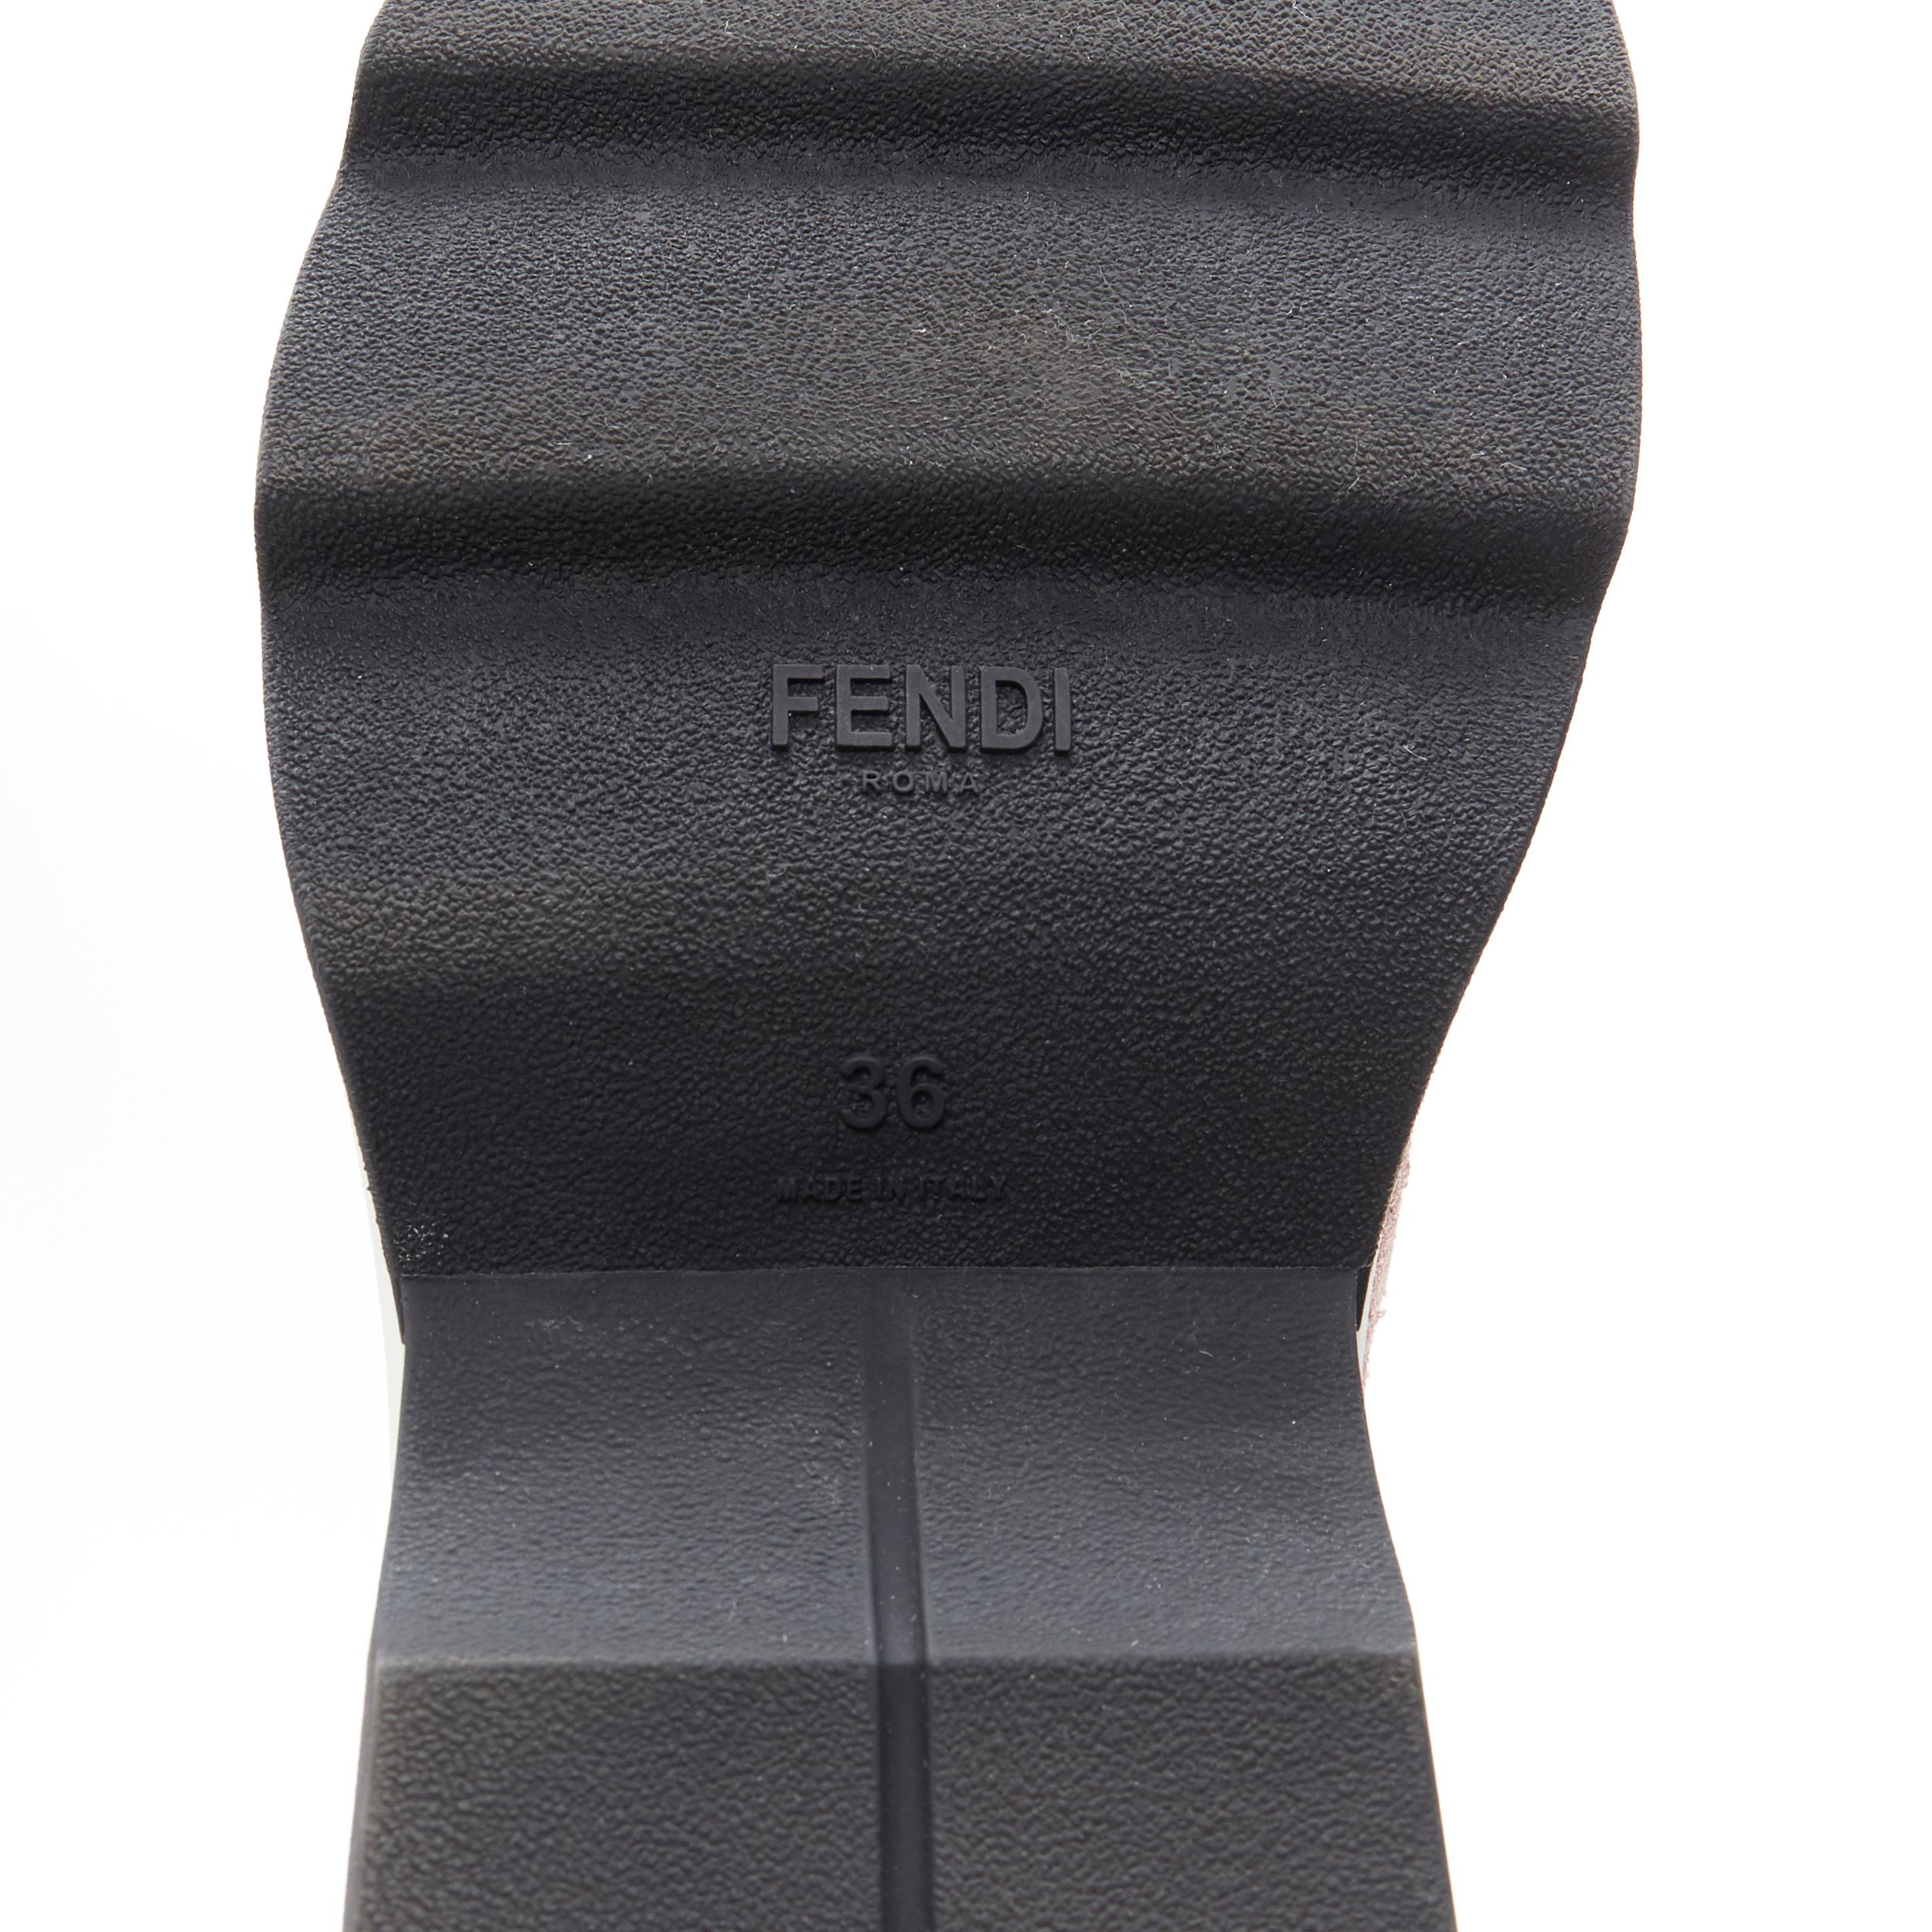 FENDI Sock Sneaker pink silver lurex round toe knitted high top shoes EU36 4